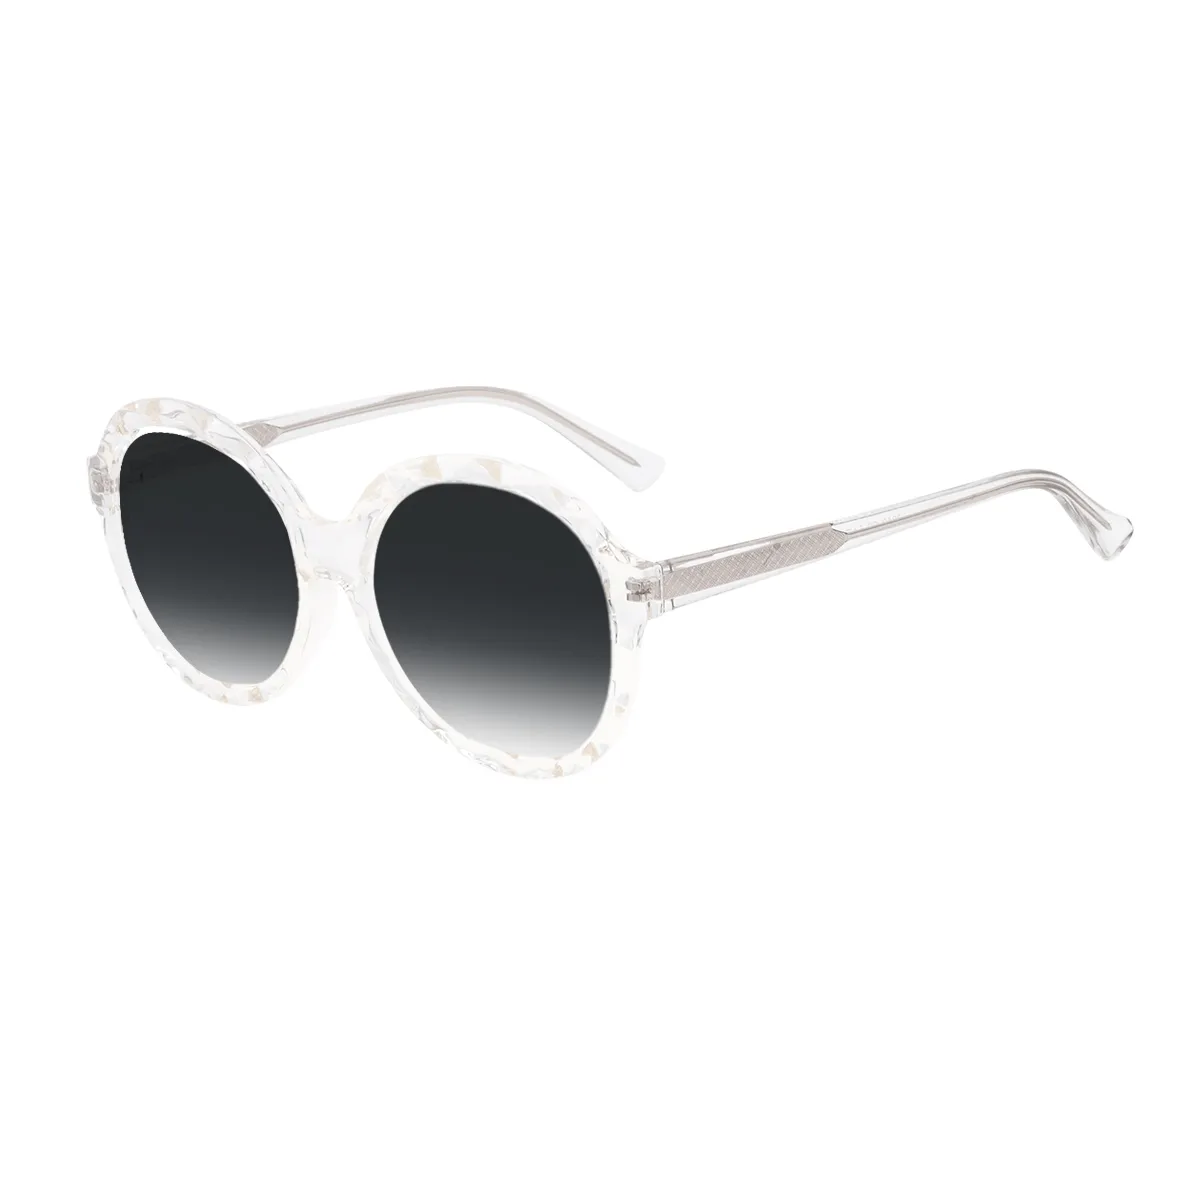 Minna - Round Translucent Sunglasses for Women